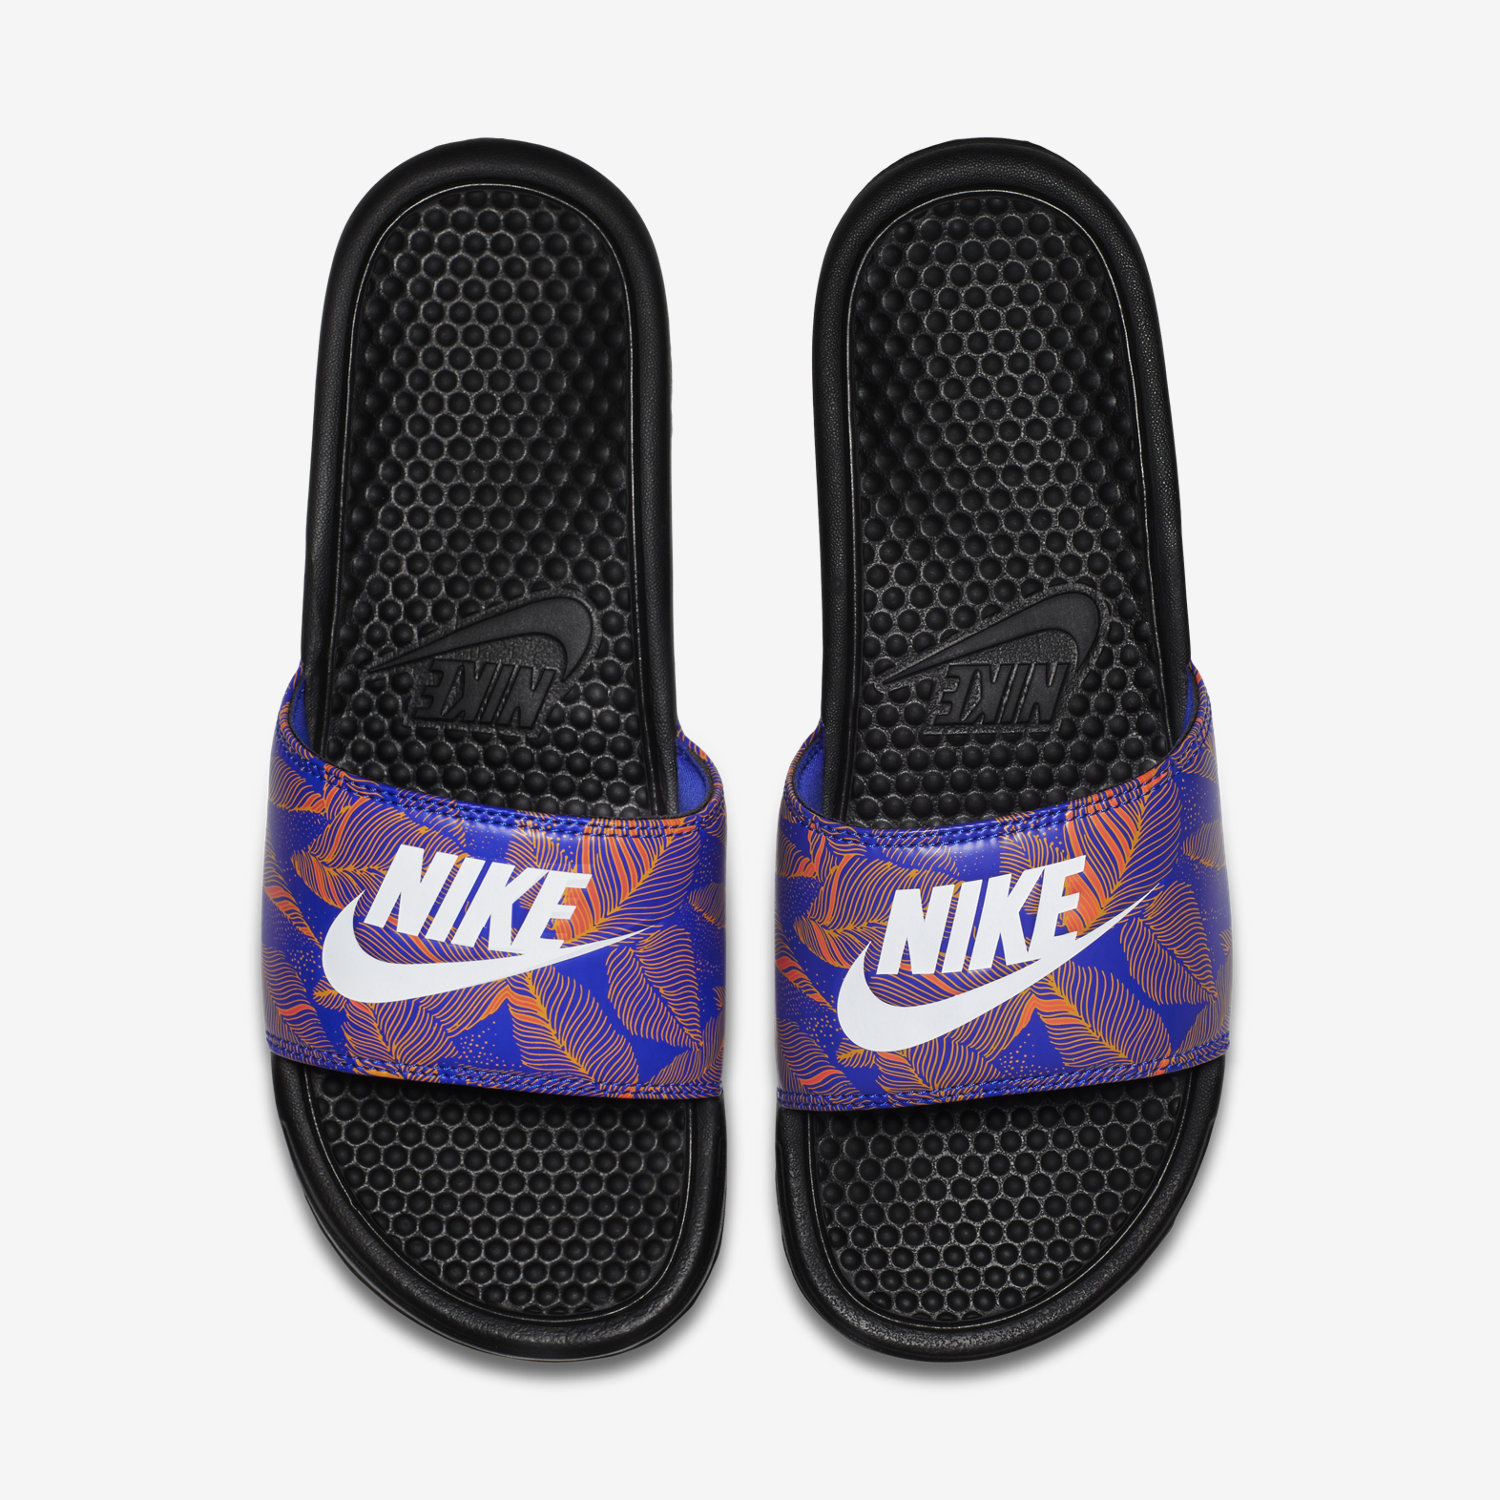 50% OFF the Nike "Floral Print" Slides Sneaker